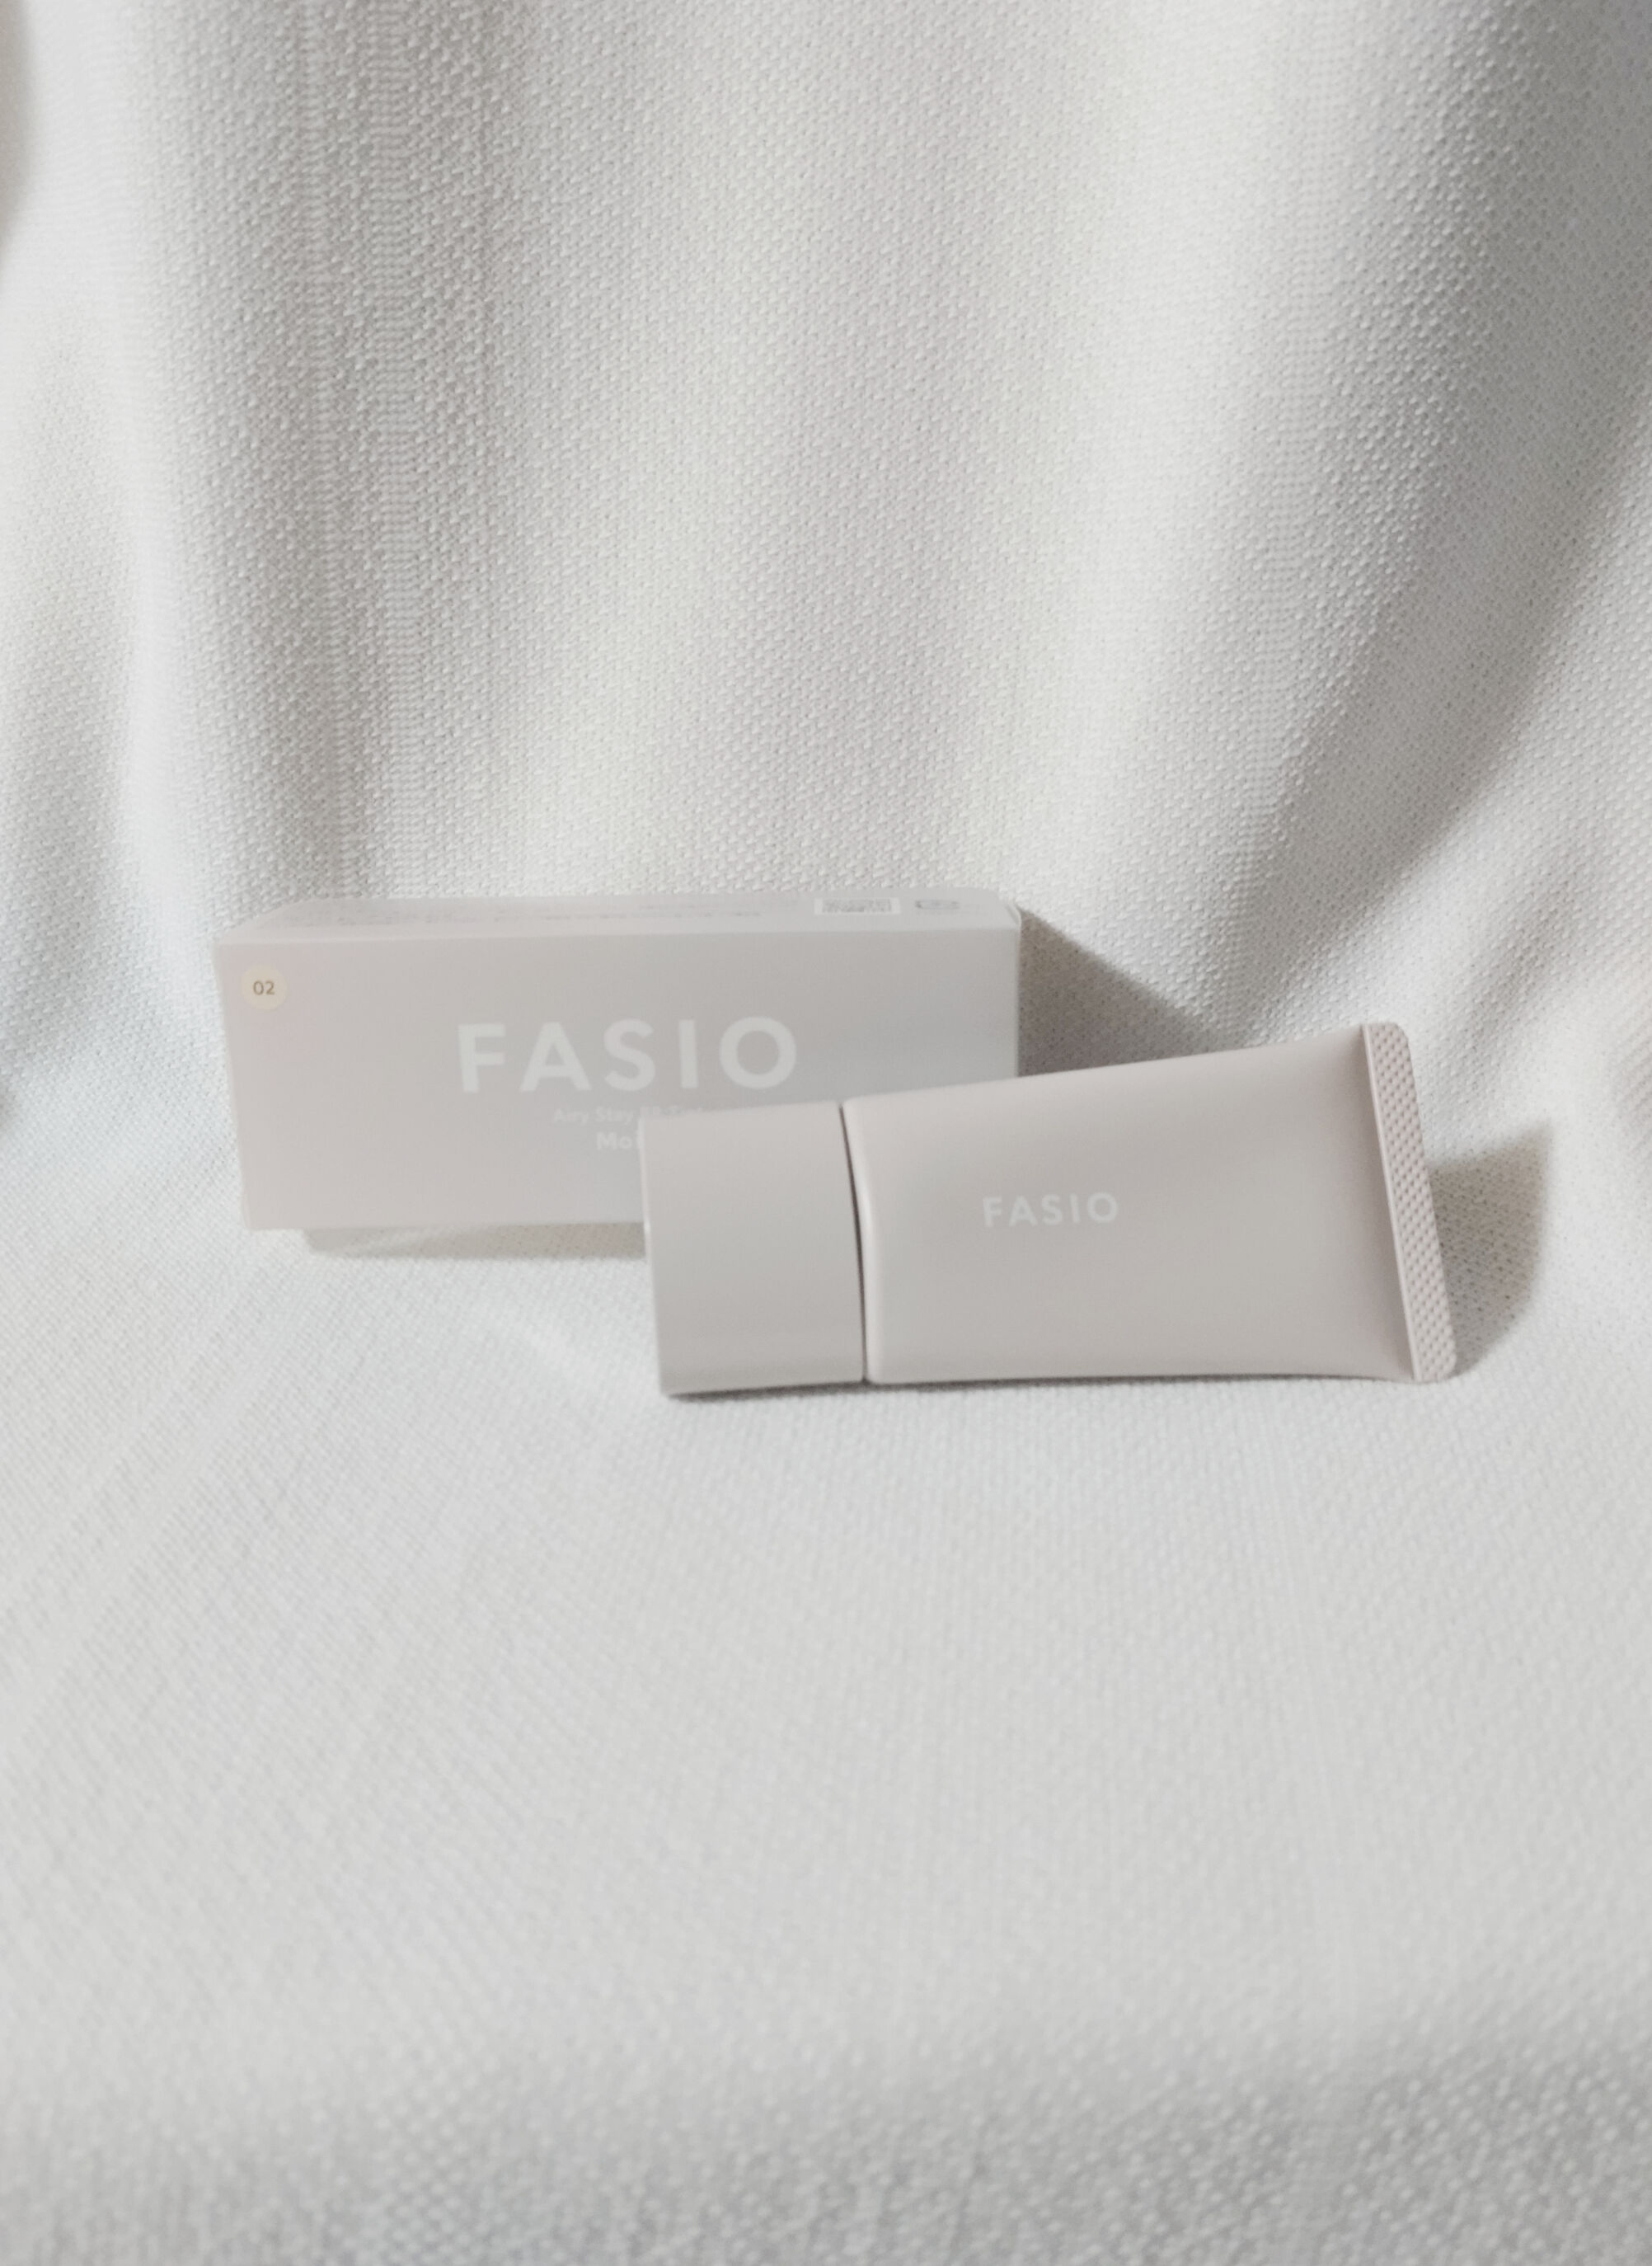 FASIO(ファシオ) エアリーステイ BB ティント モイストを使った恵未さんのクチコミ画像2